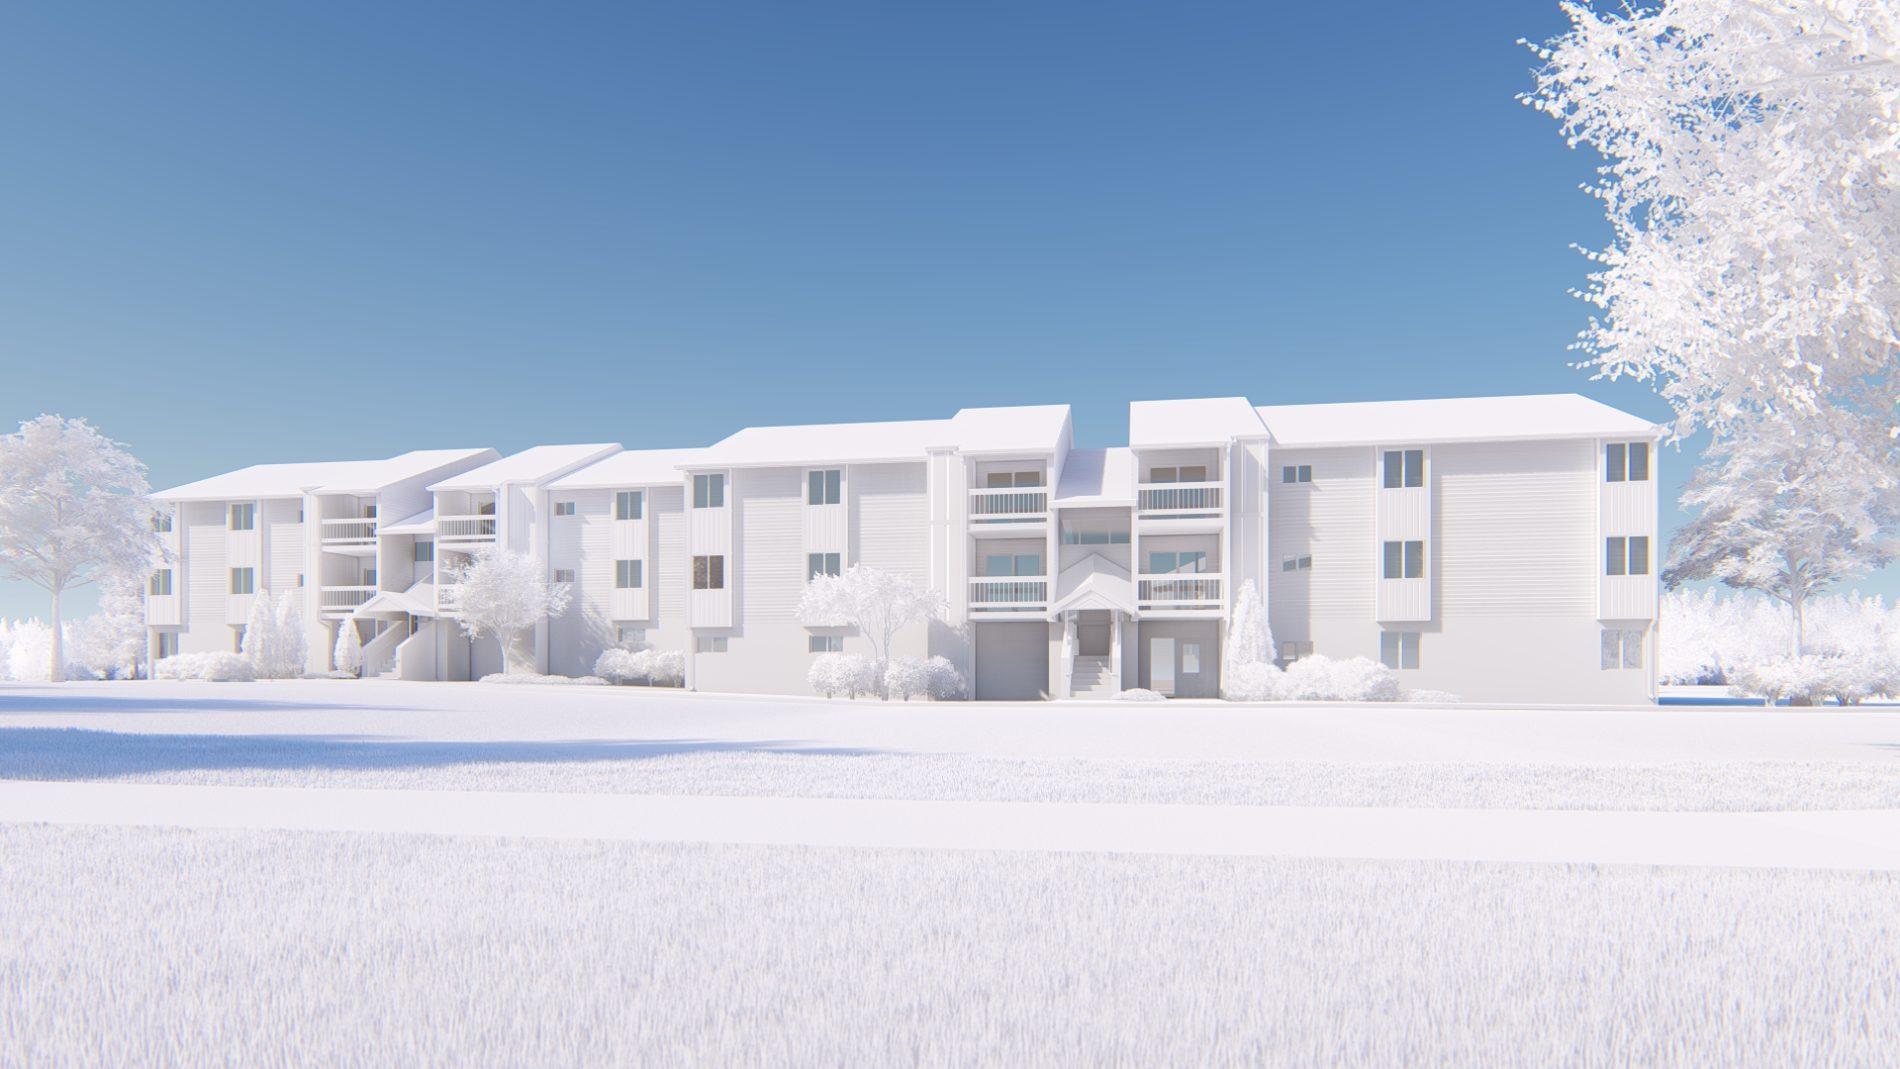 Architectural rendering of apartment building 3D design model